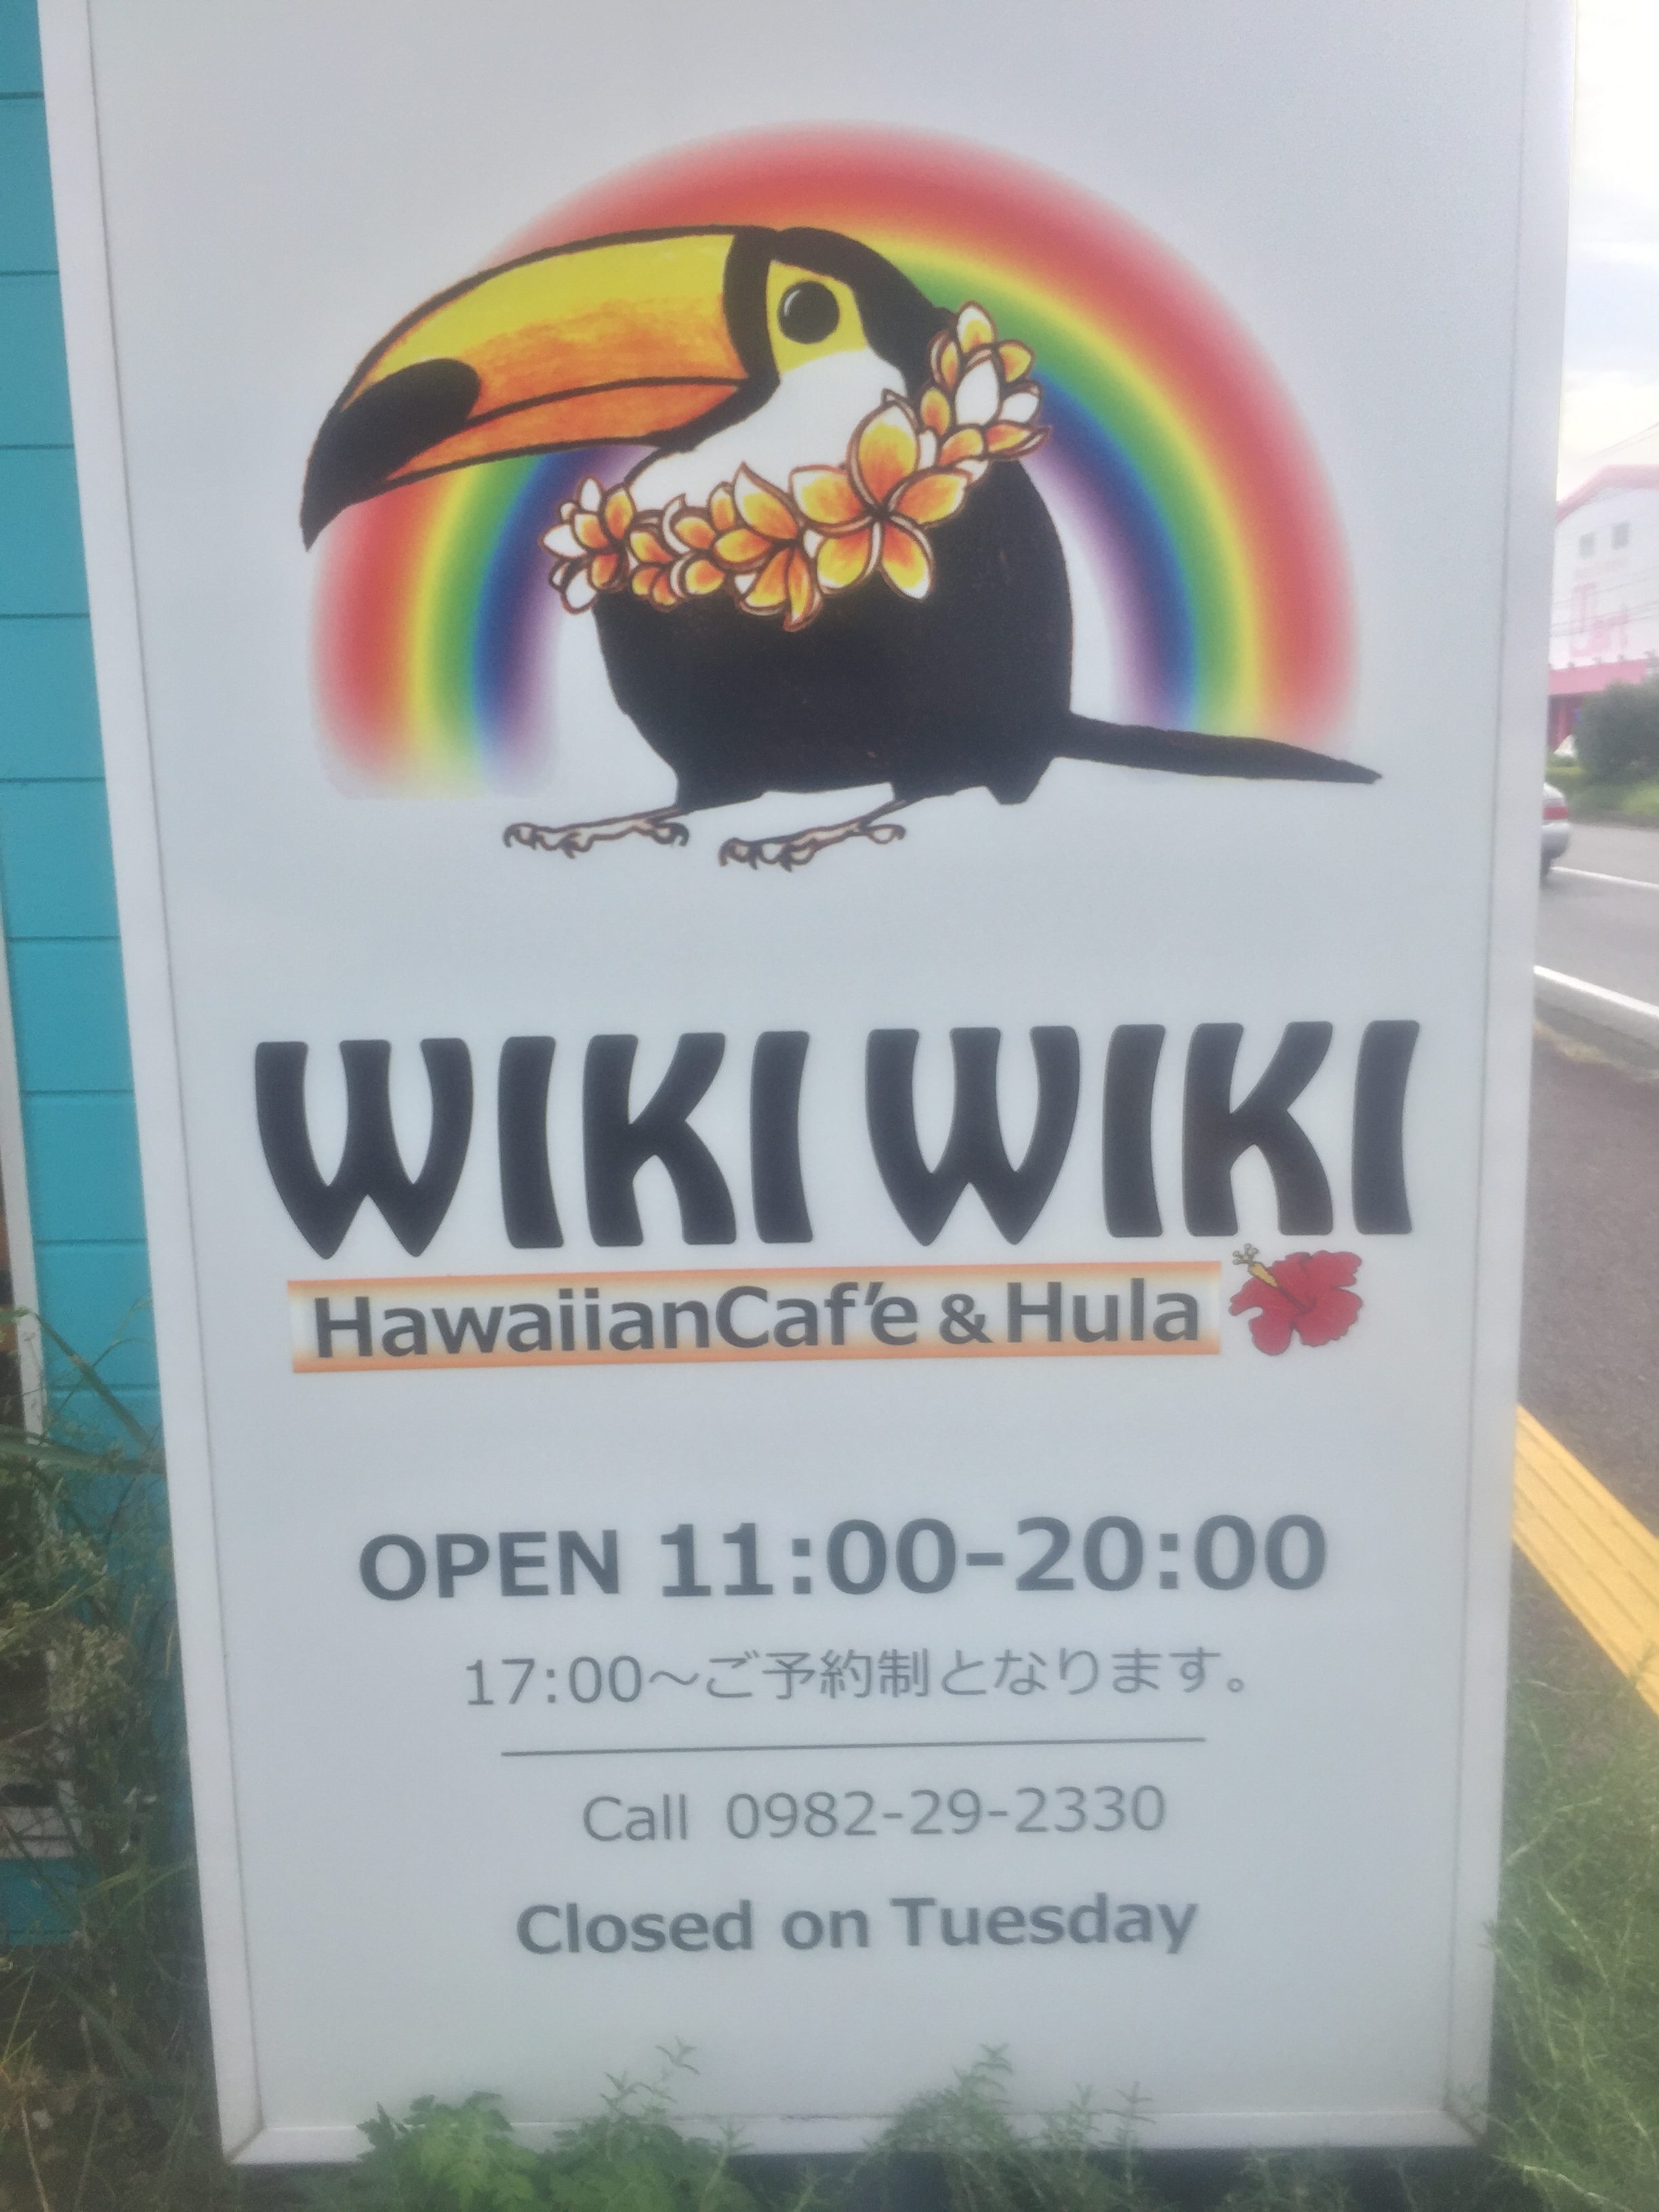 HawaiianCafe & Hula WIKI WIKI【ハワイアンカフェ & フラ・ウィキウィキ】